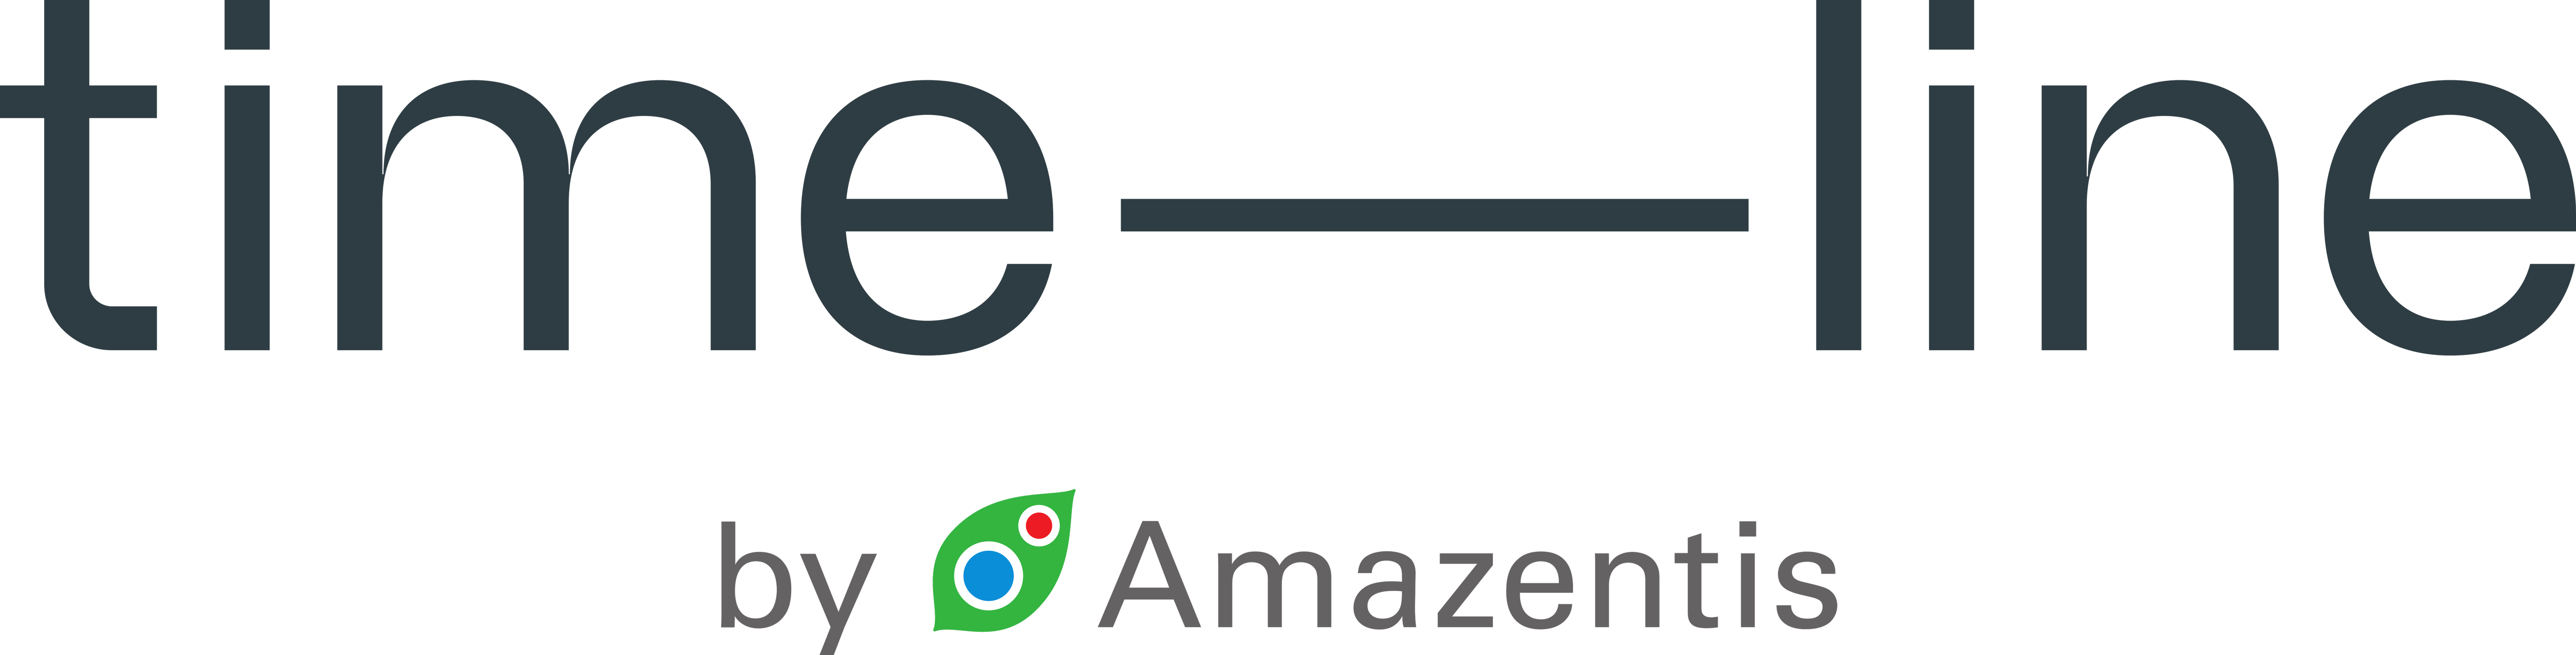 Amazentis/Time-line_logo